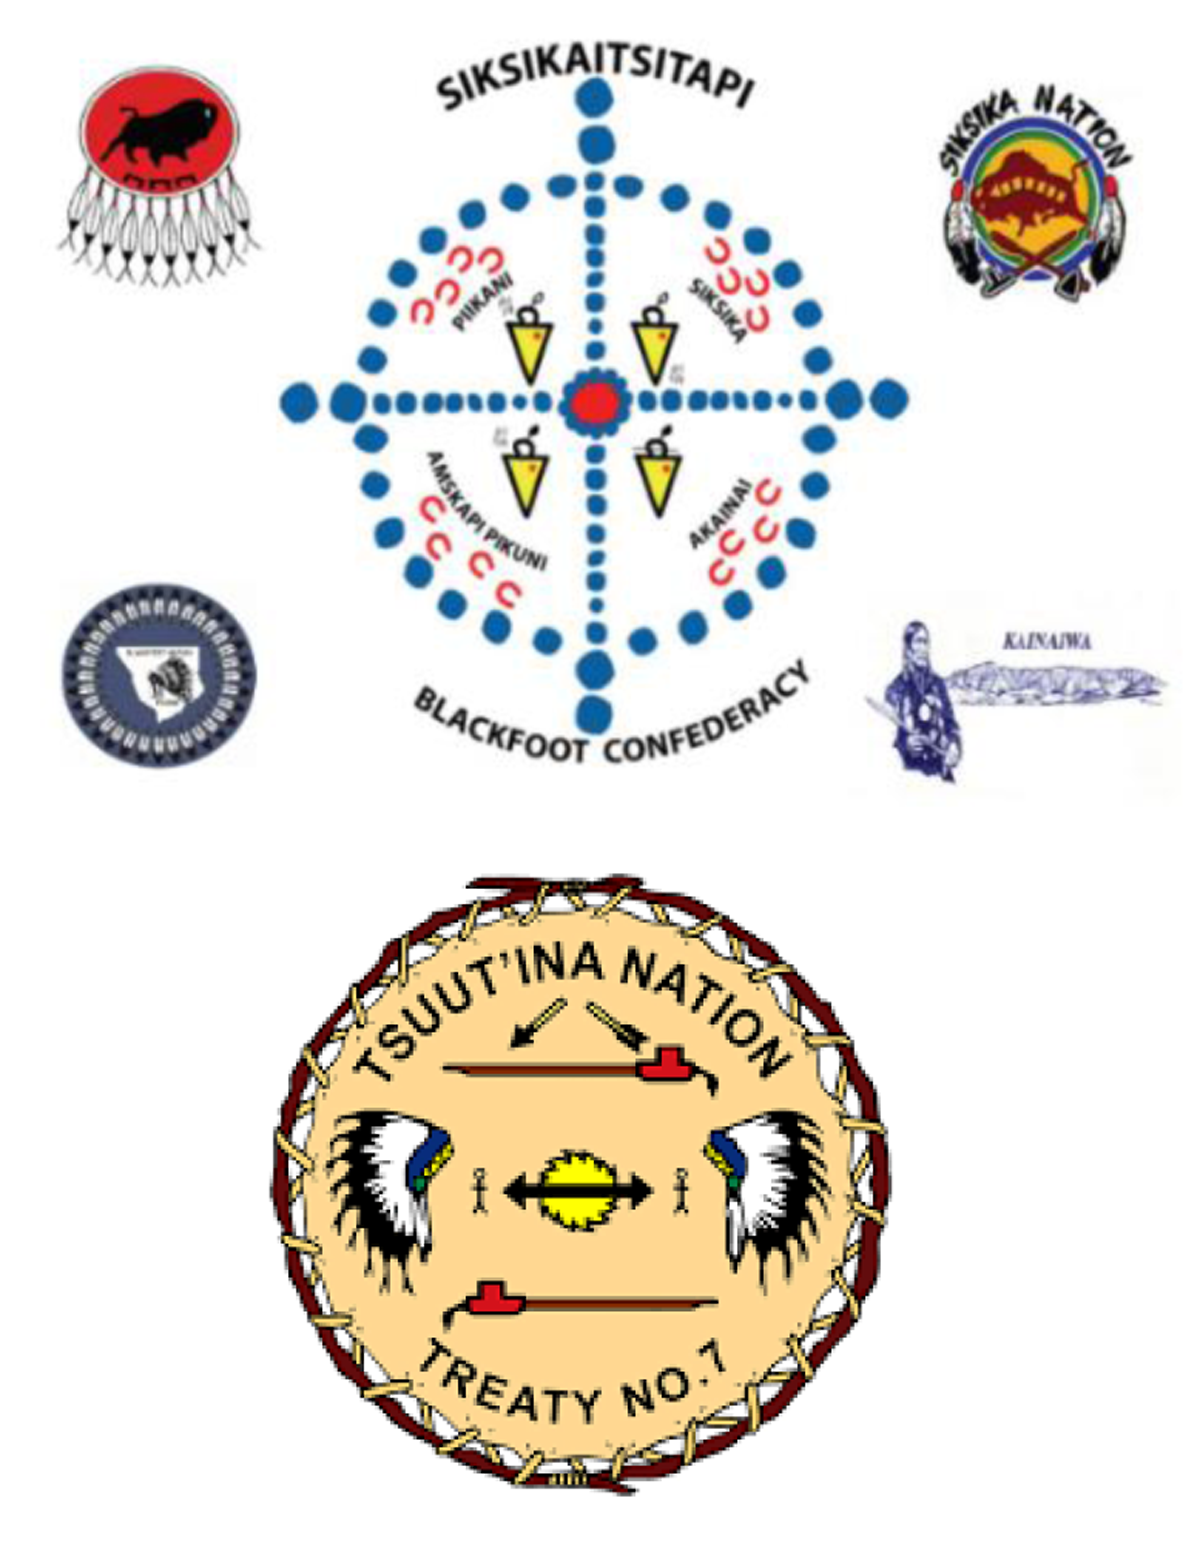 Top – Symbol of the Blackfoot Confederacy; Bottom – Symbol of the Tsuut’ina Nation